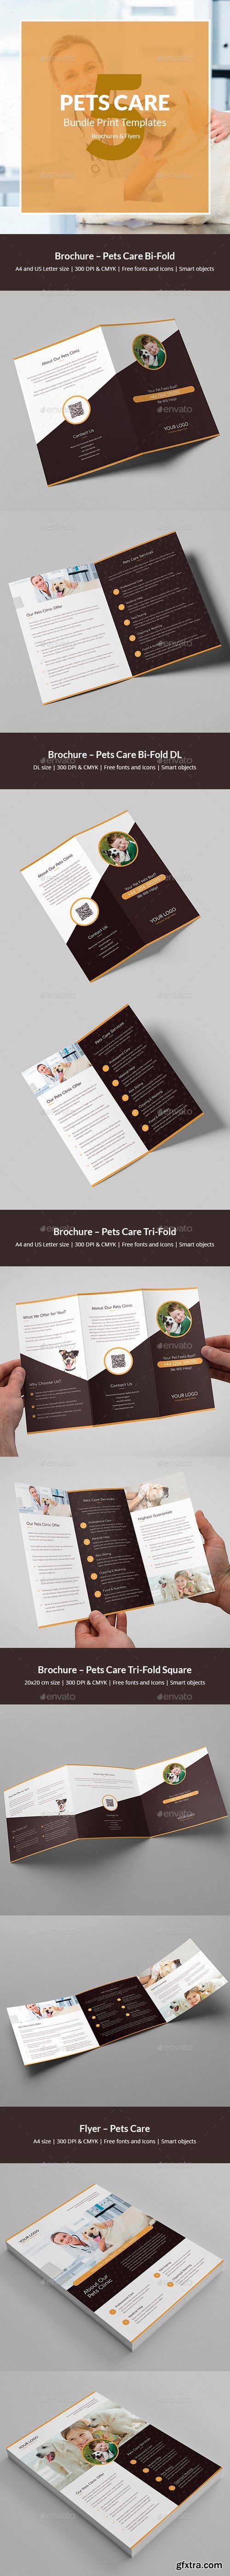 Graphicriver - Pets Care – Bundle Print Templates 5 in 1 21406879